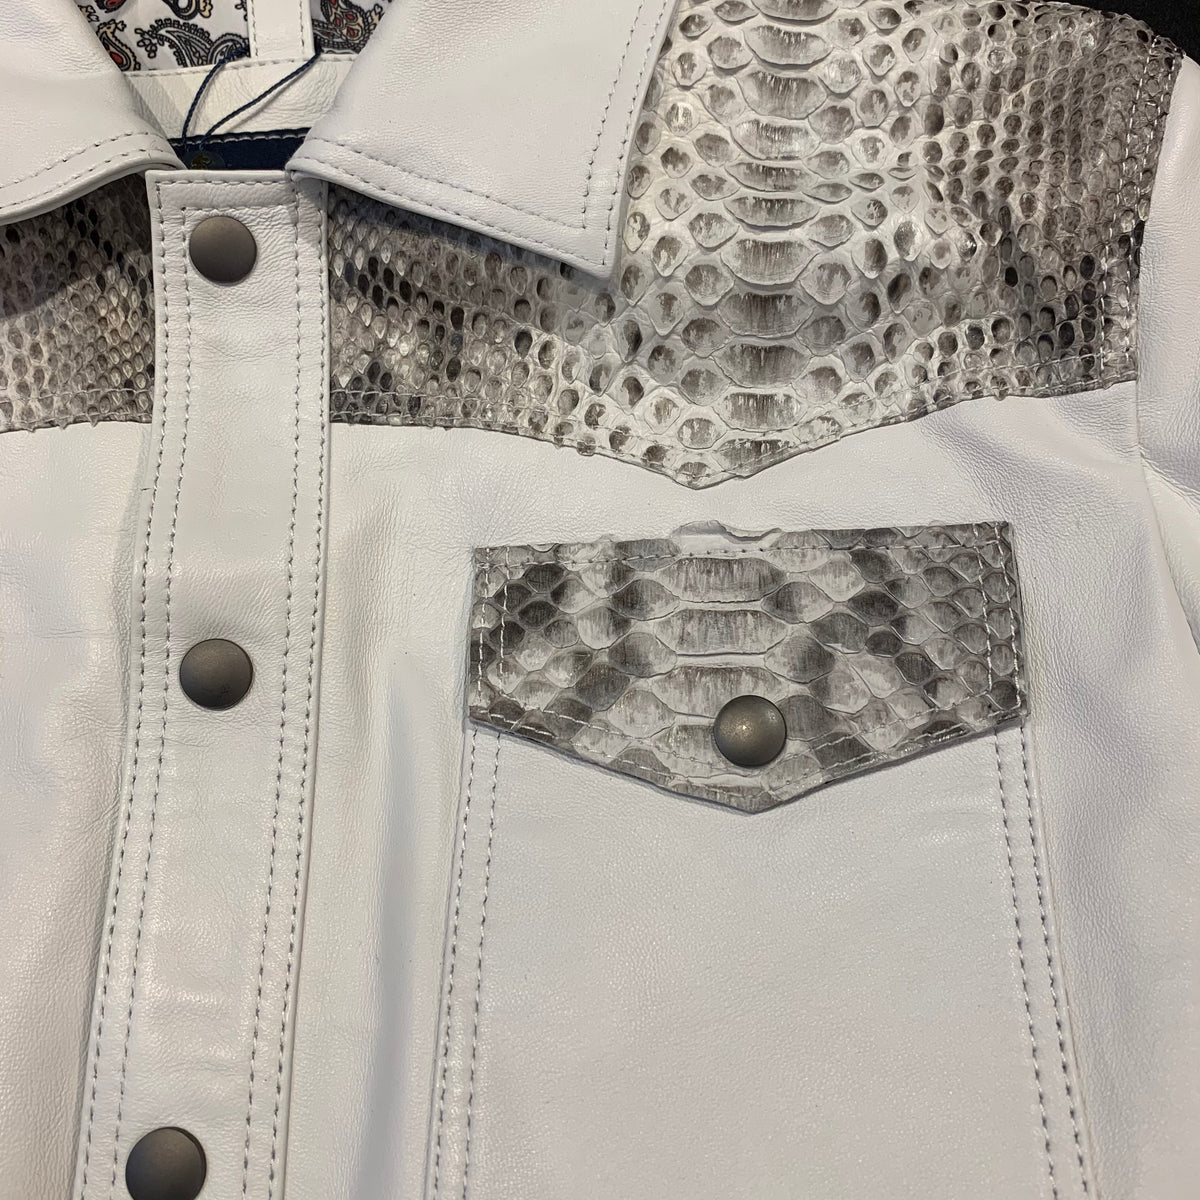 Barya NewYork White/Natural Python Snakeskin Button-Up Shirt - Dudes Boutique